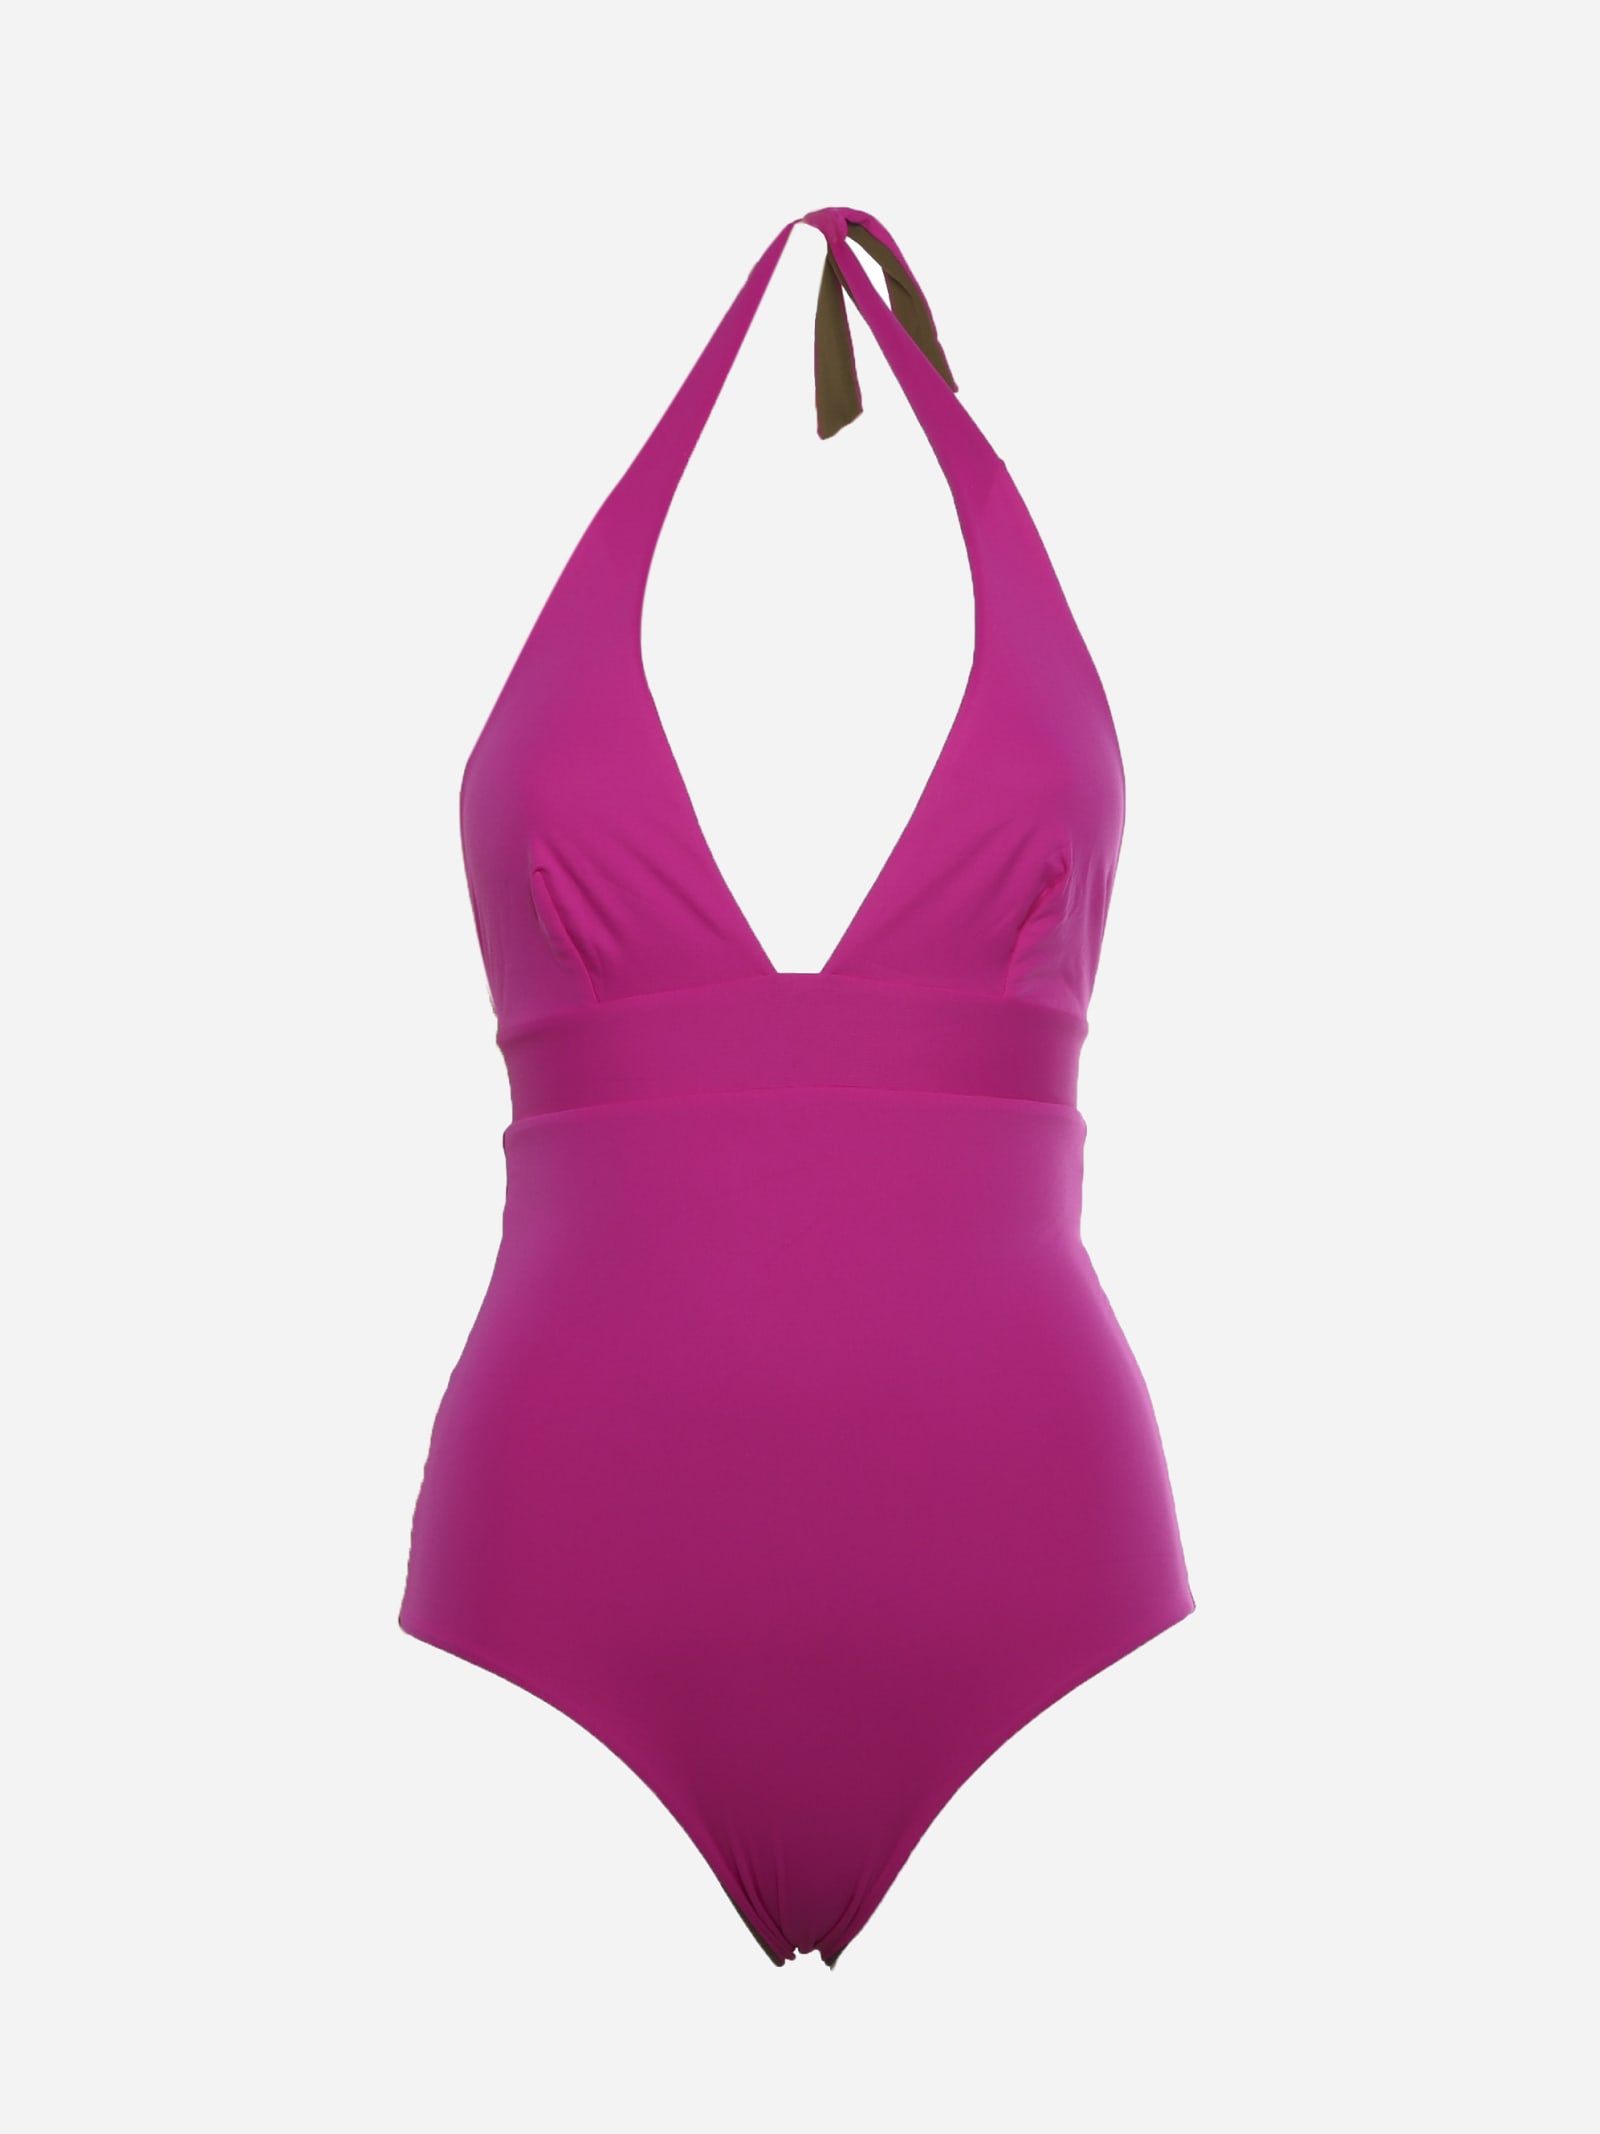 Fisico - Cristina Ferrari Reversible Two-tone One-piece Swimsuit